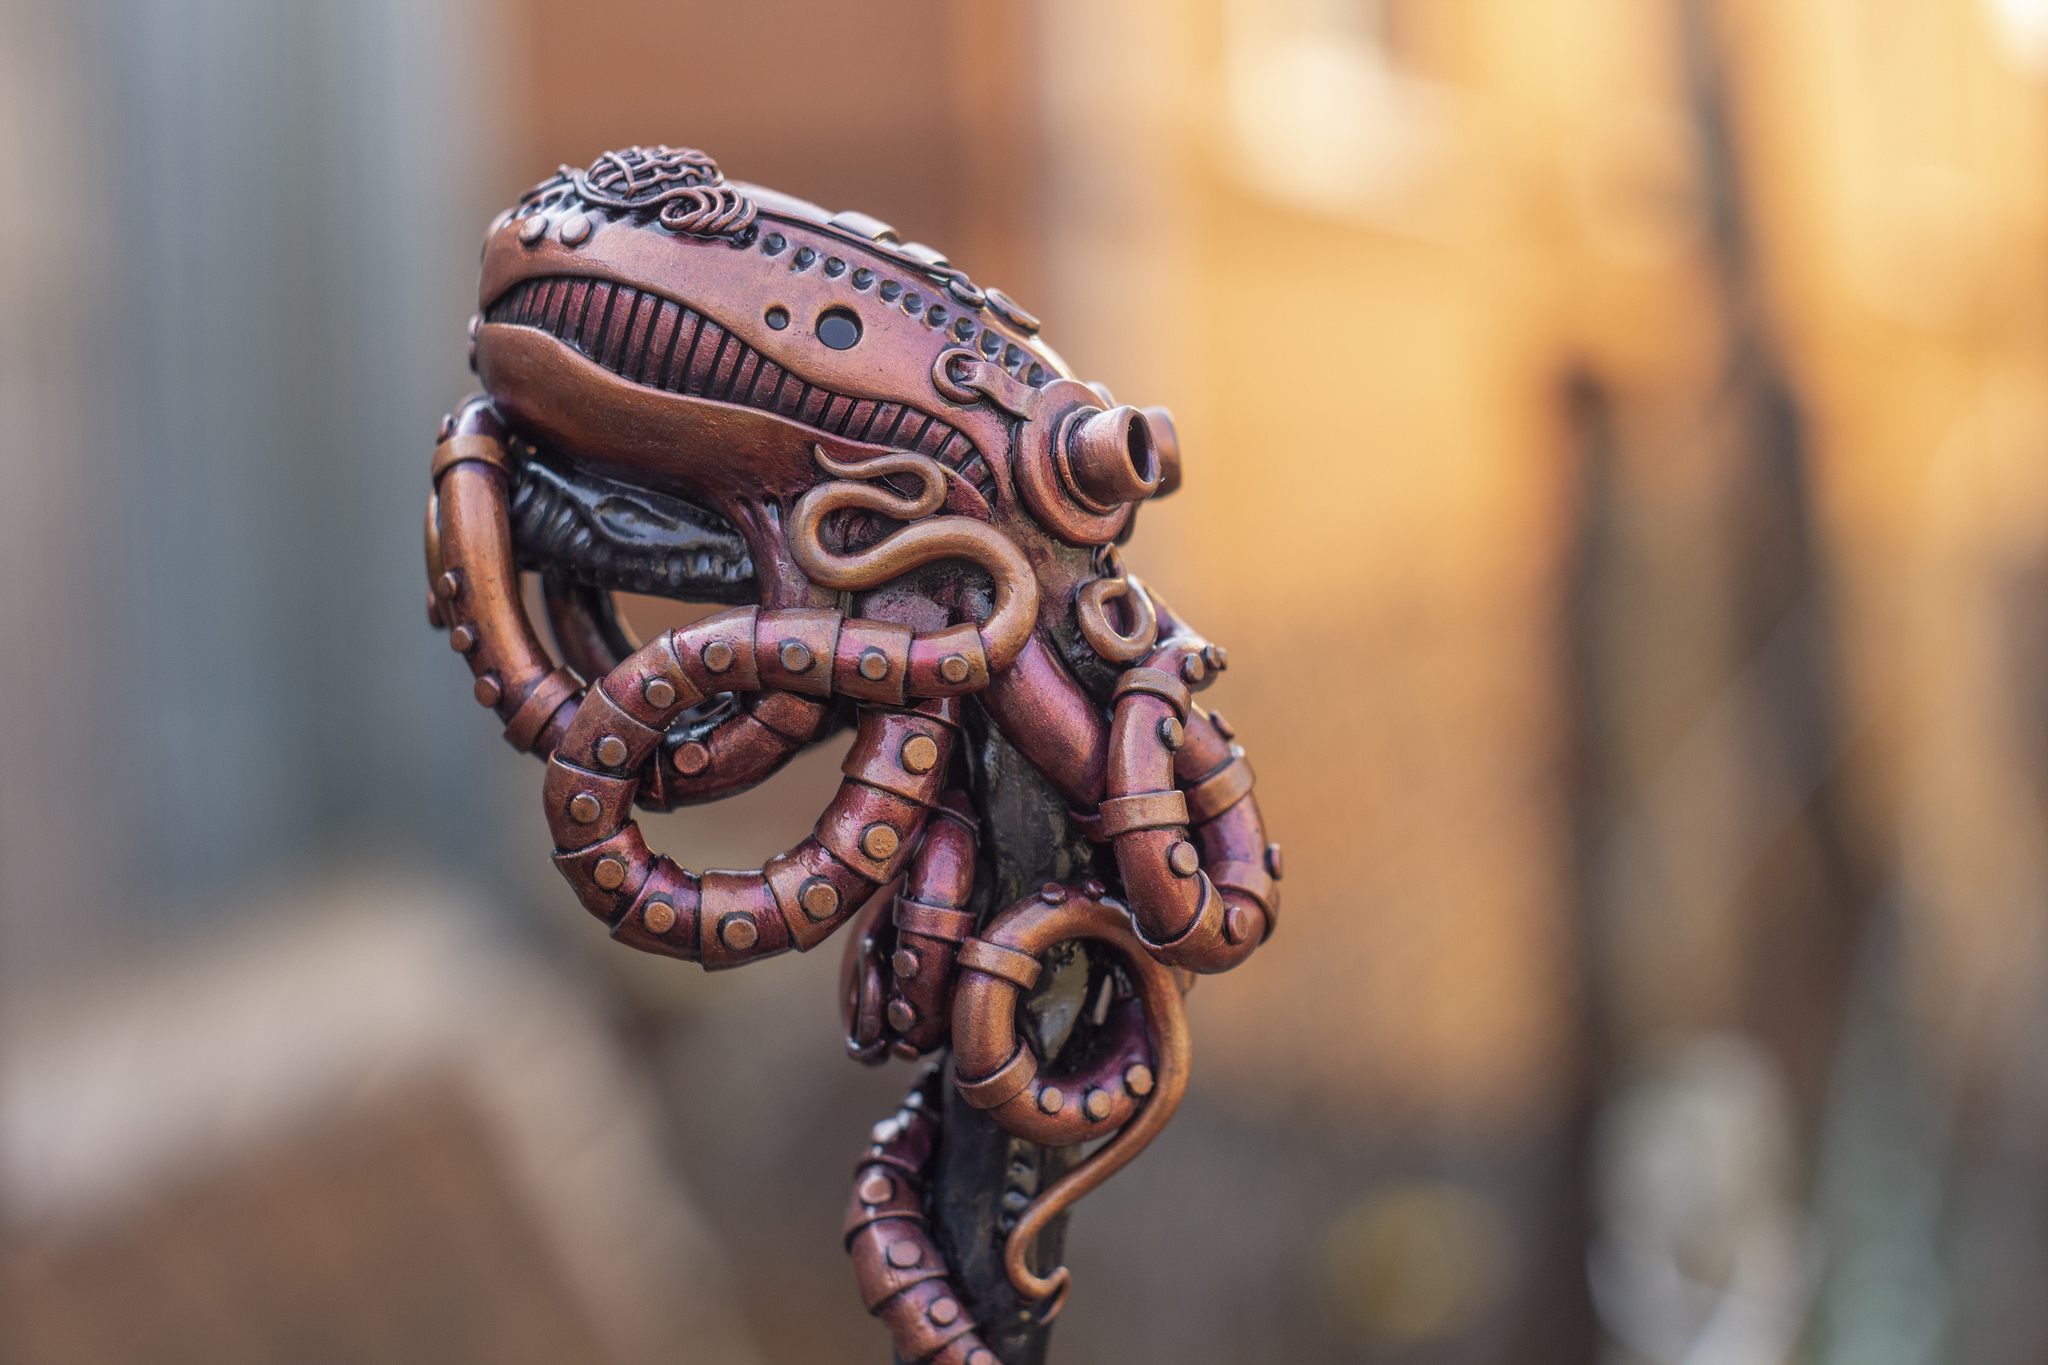 Octopus figurine in the style of Biomechanics made of polymer clay - My, Octopus, Biomechanics, Steampunk, Polymer clay, Handmade, Longpost